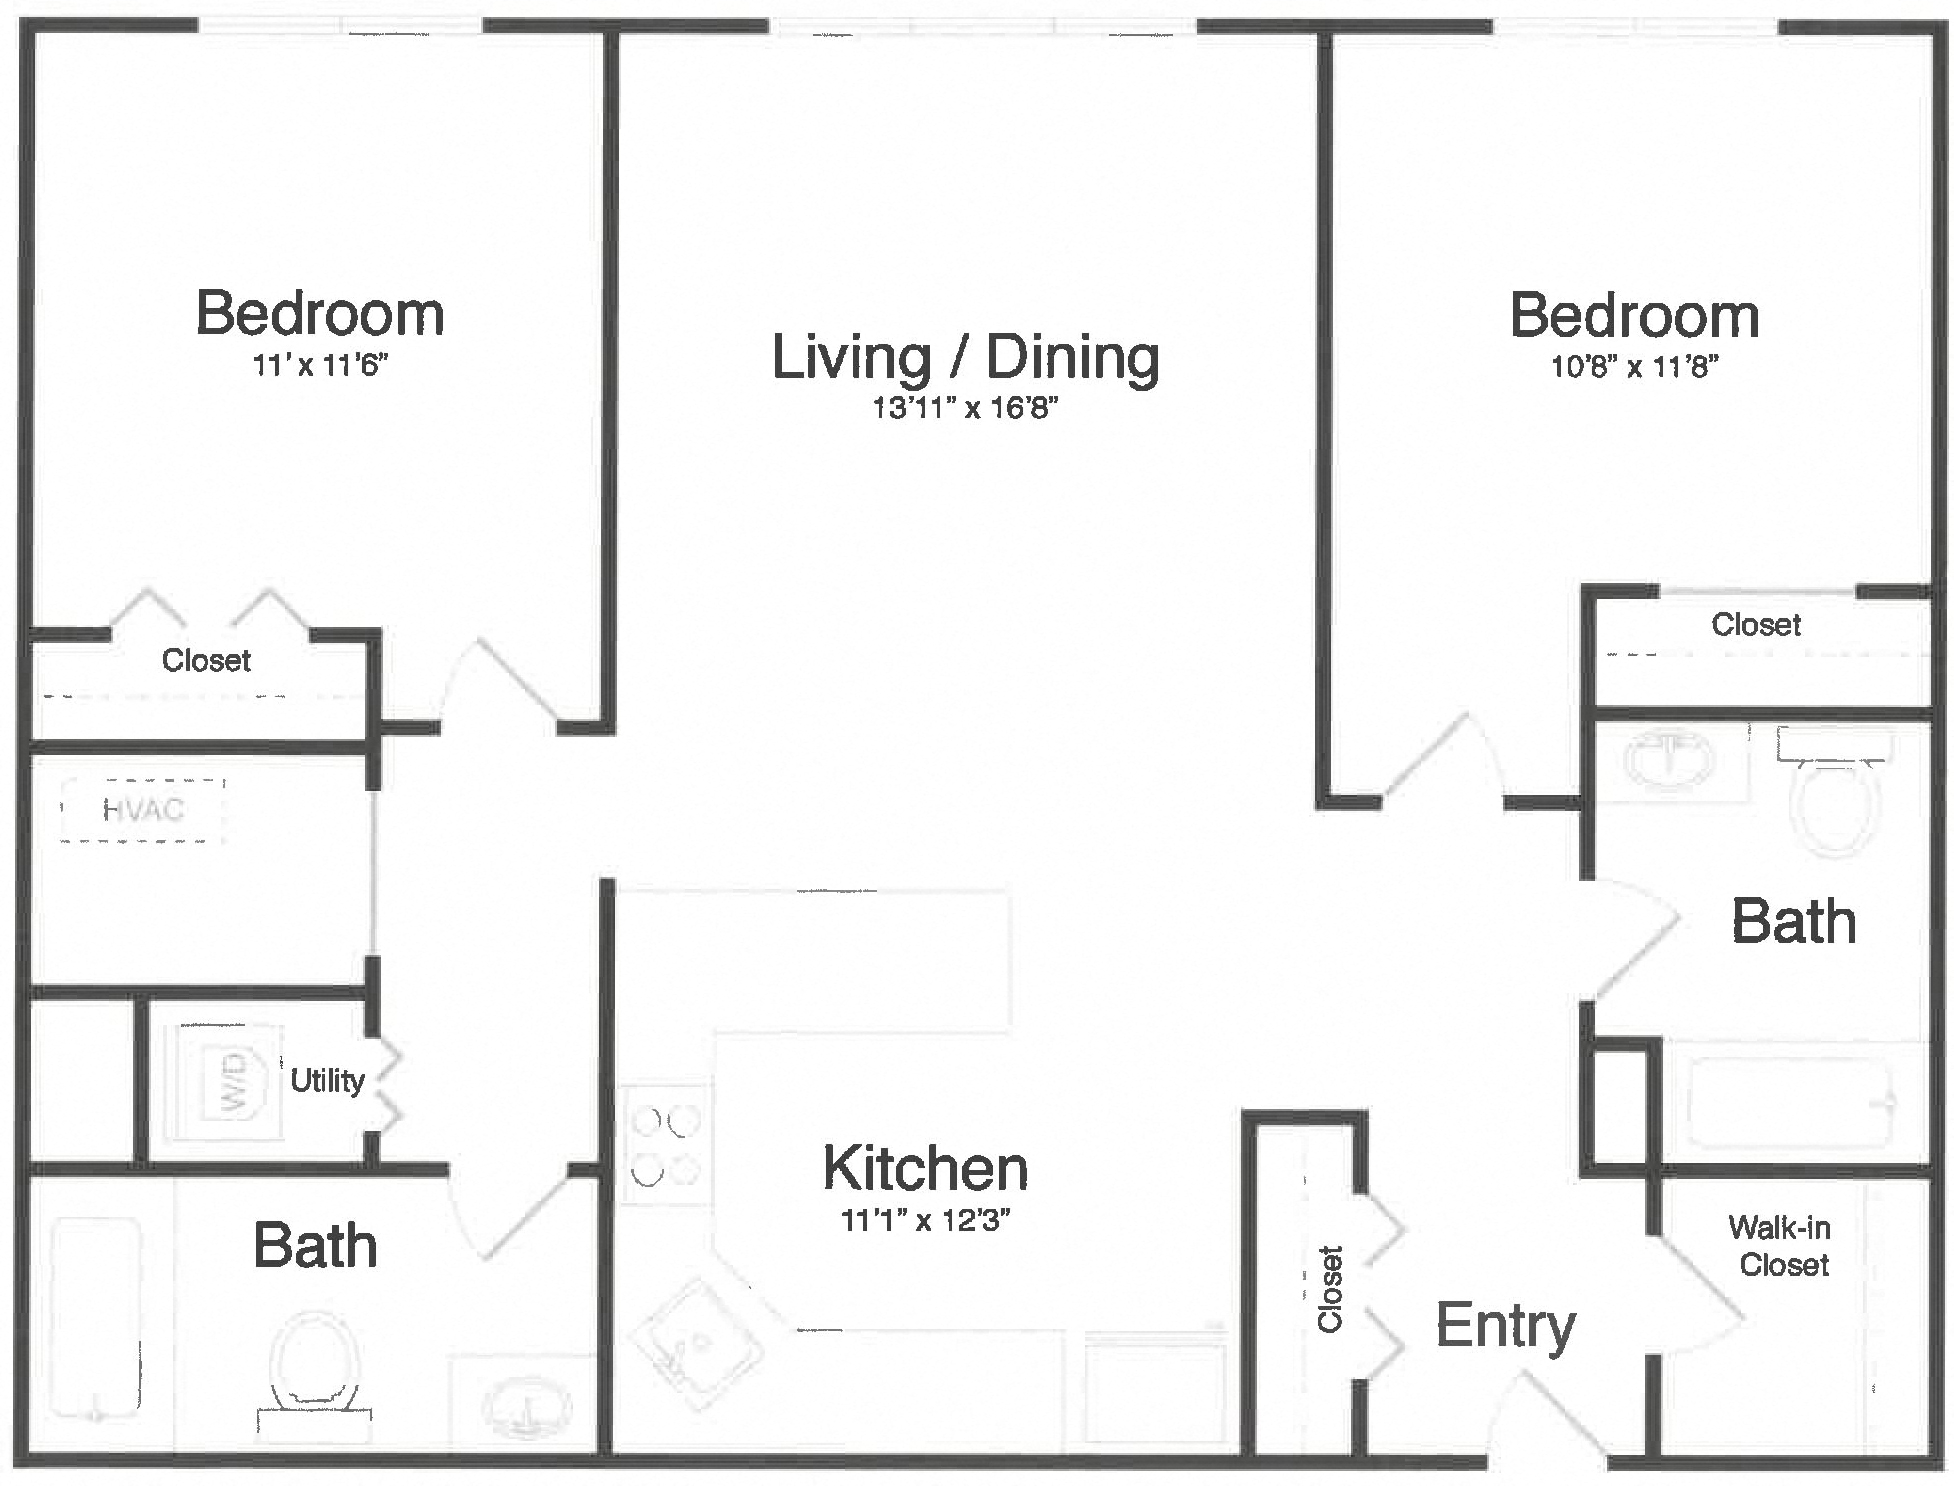 Apartment 1-6A floorplan